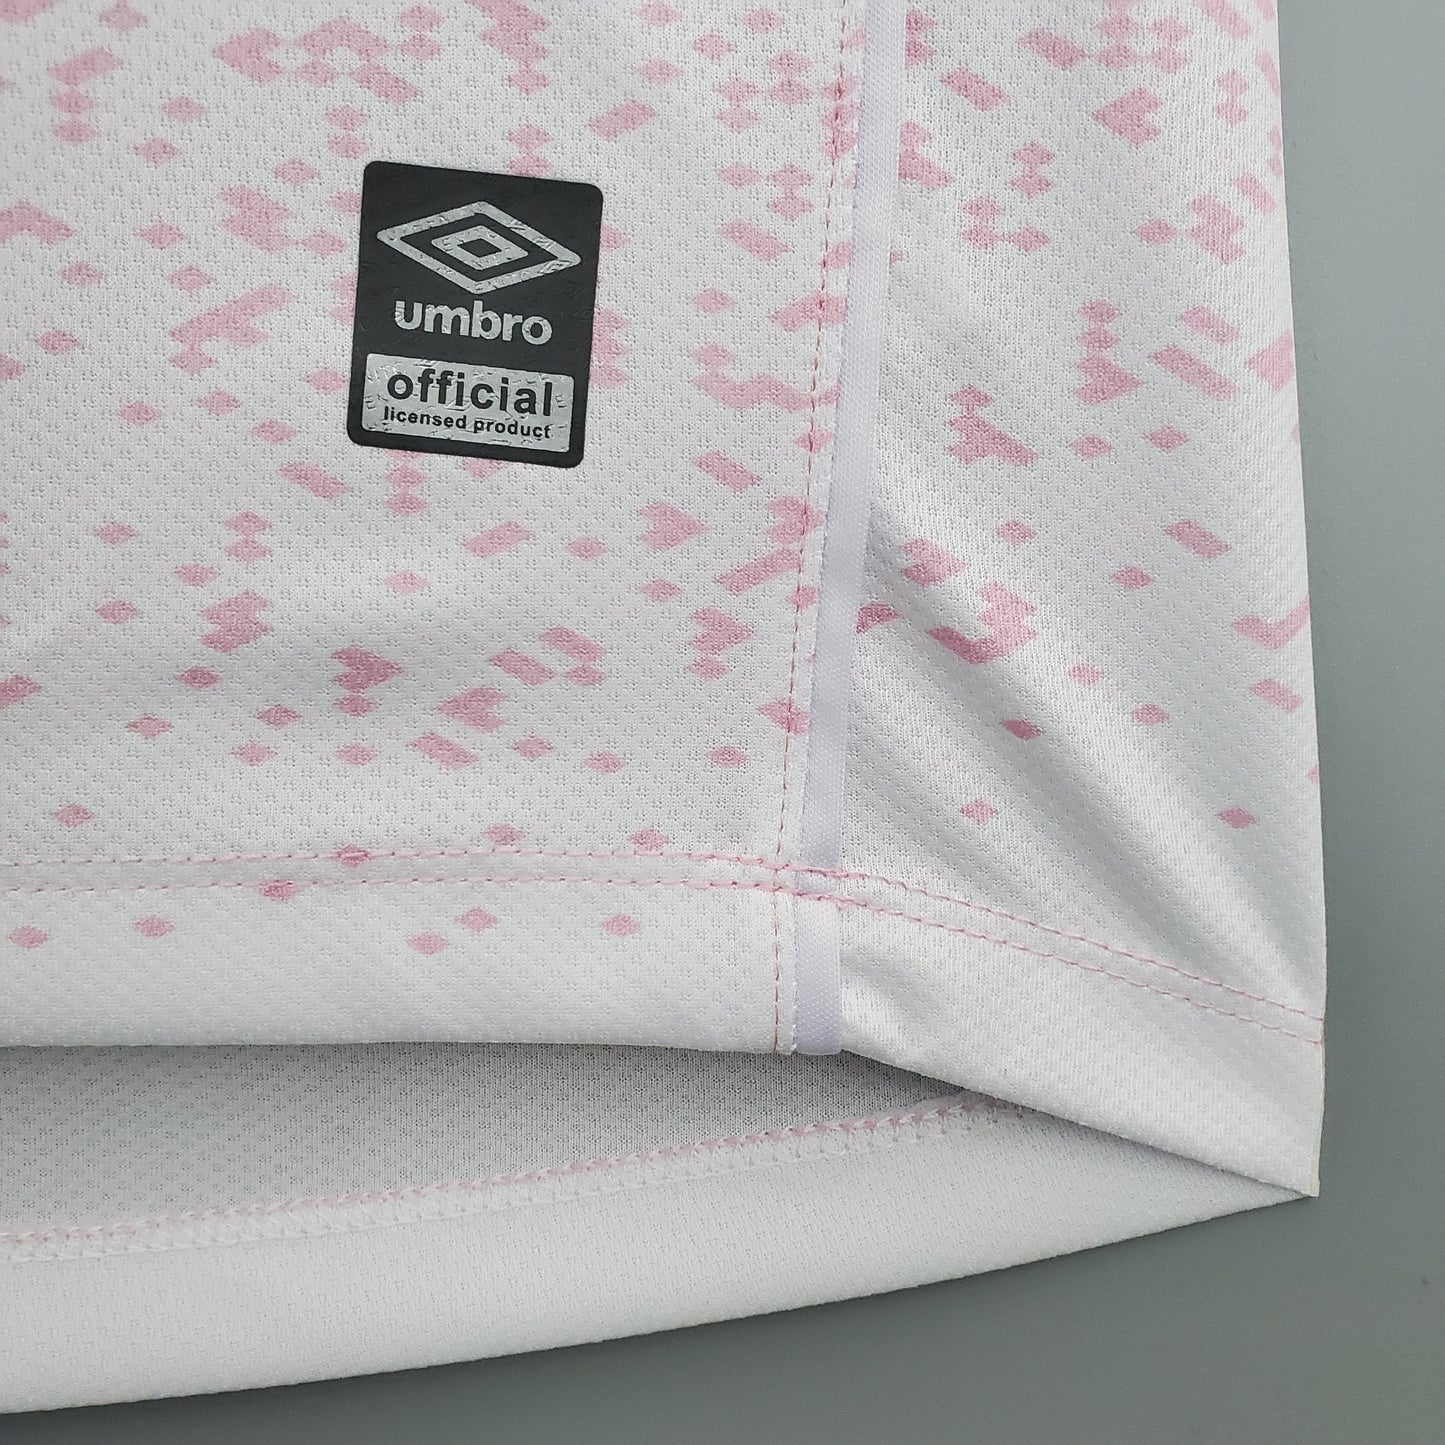 Santos Special Edition Pink Kit